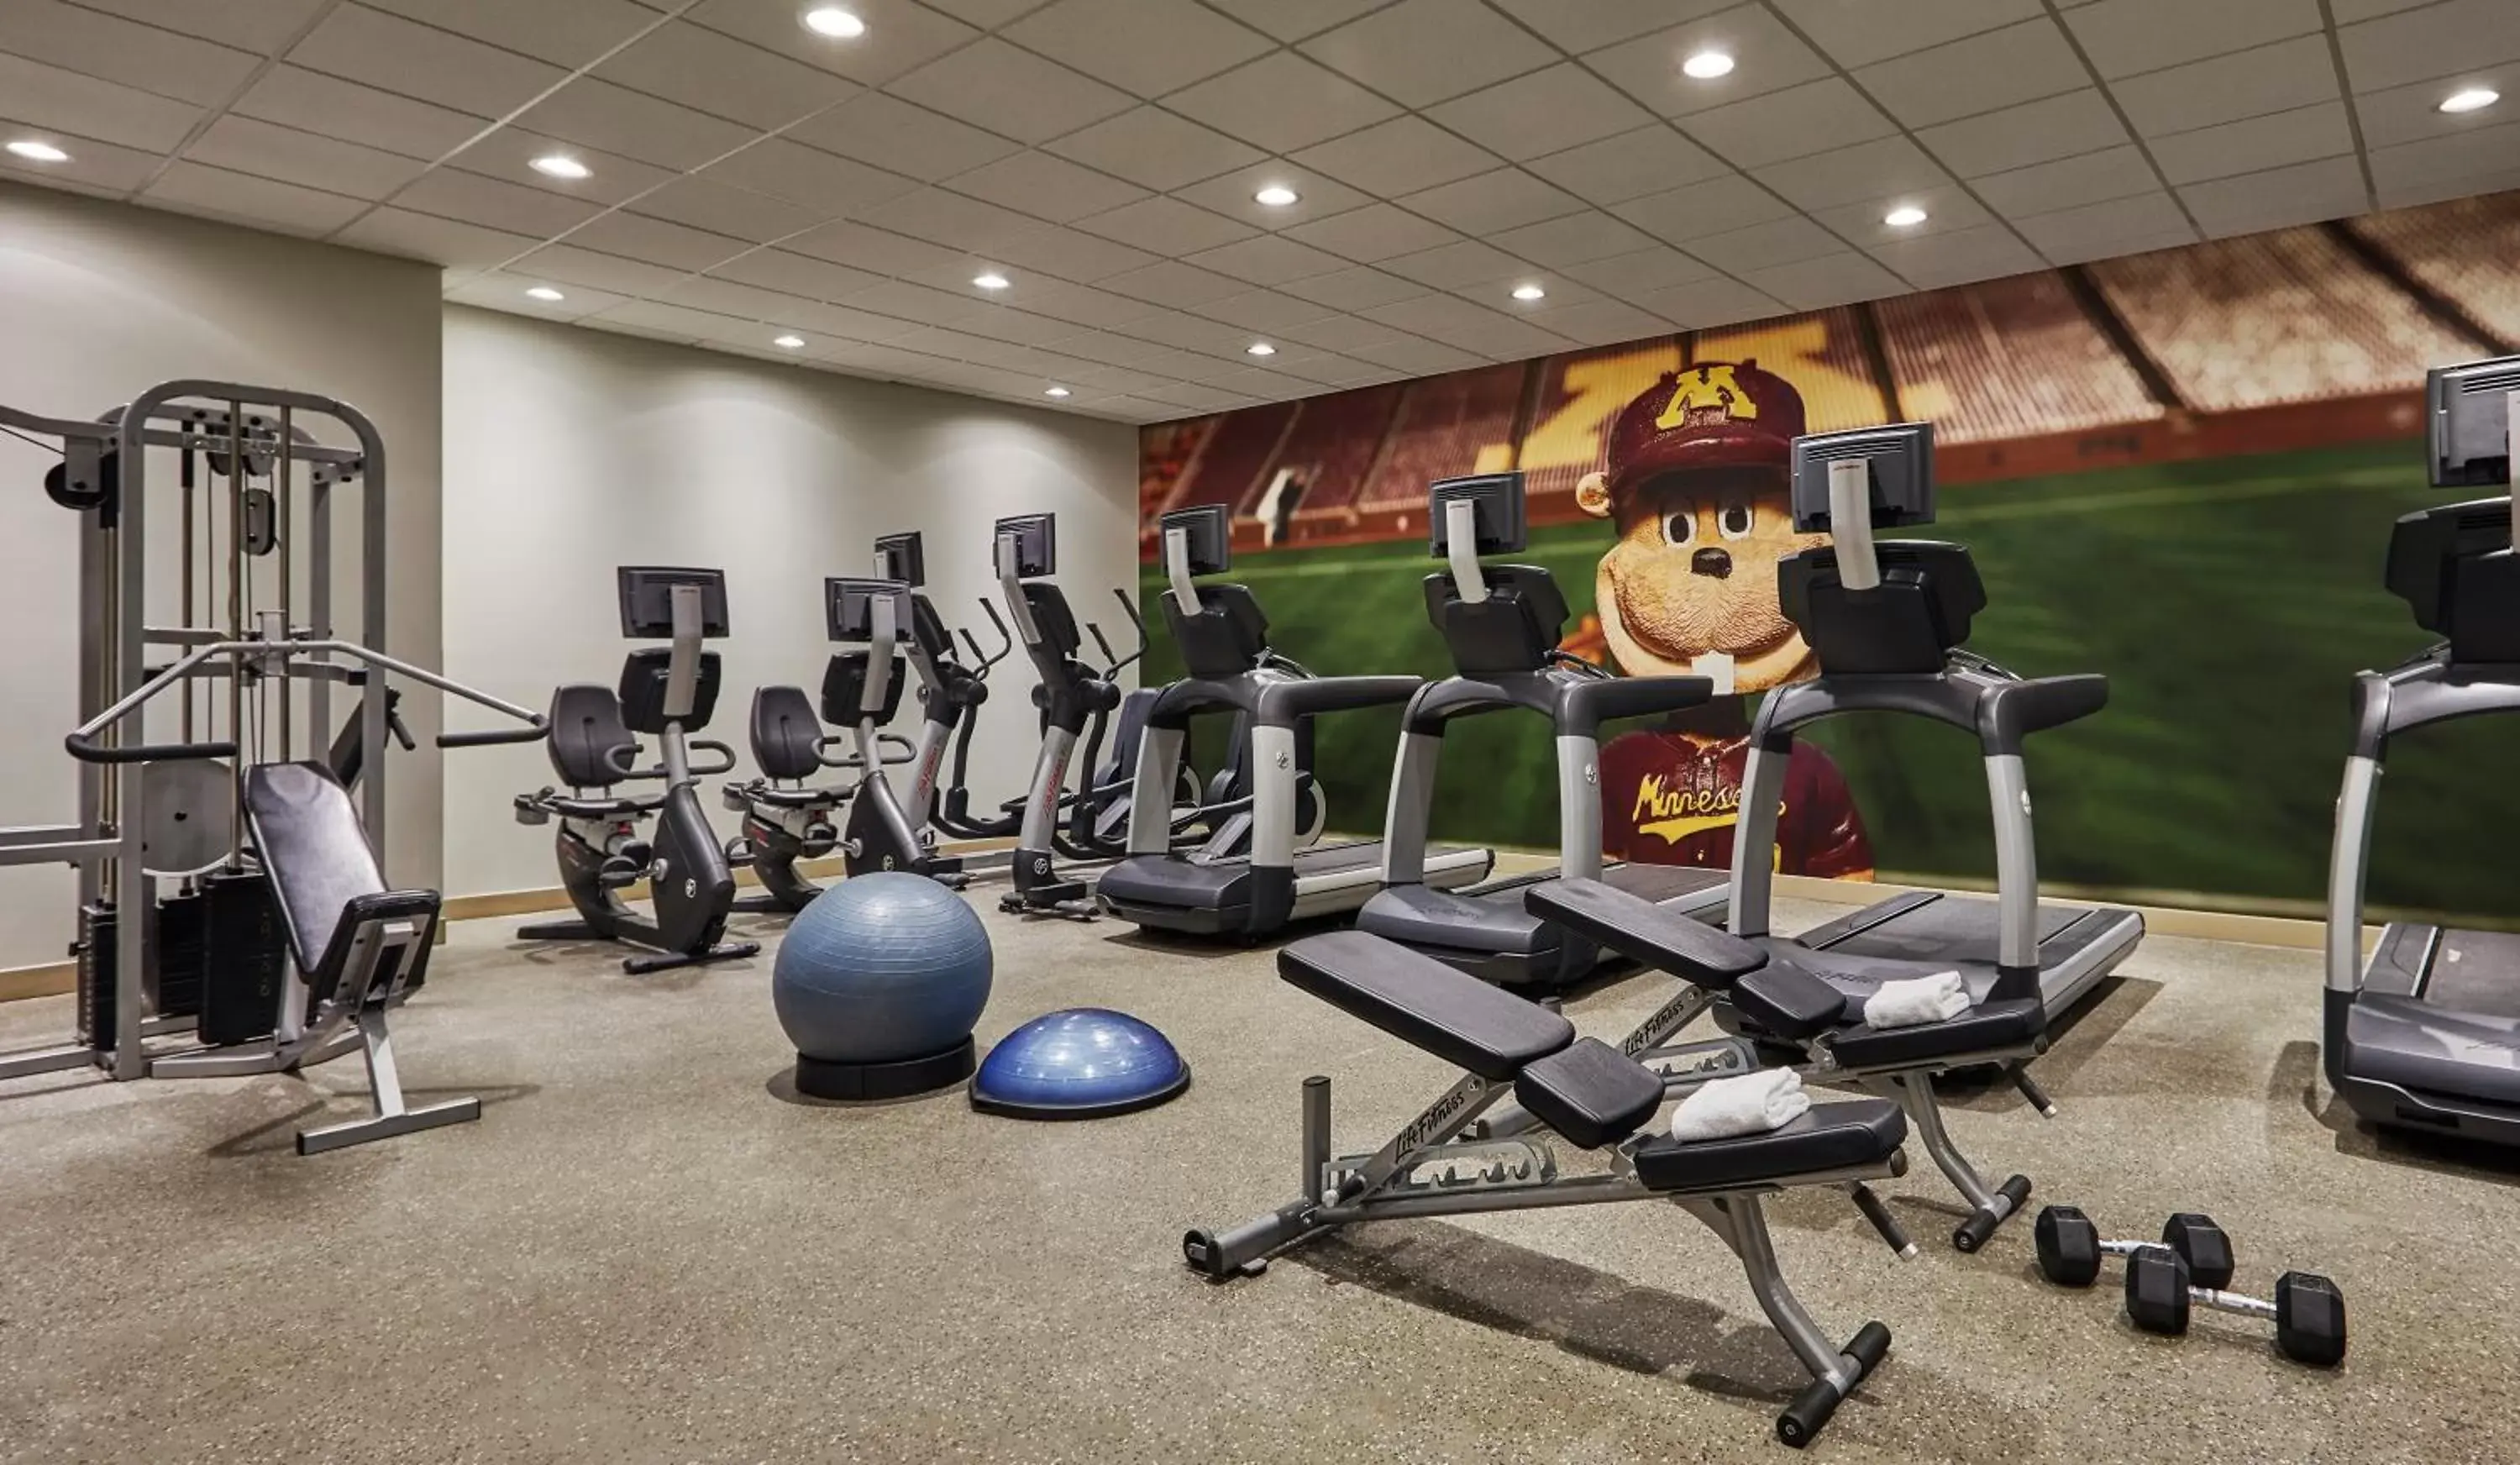 Fitness centre/facilities, Fitness Center/Facilities in Graduate Minneapolis